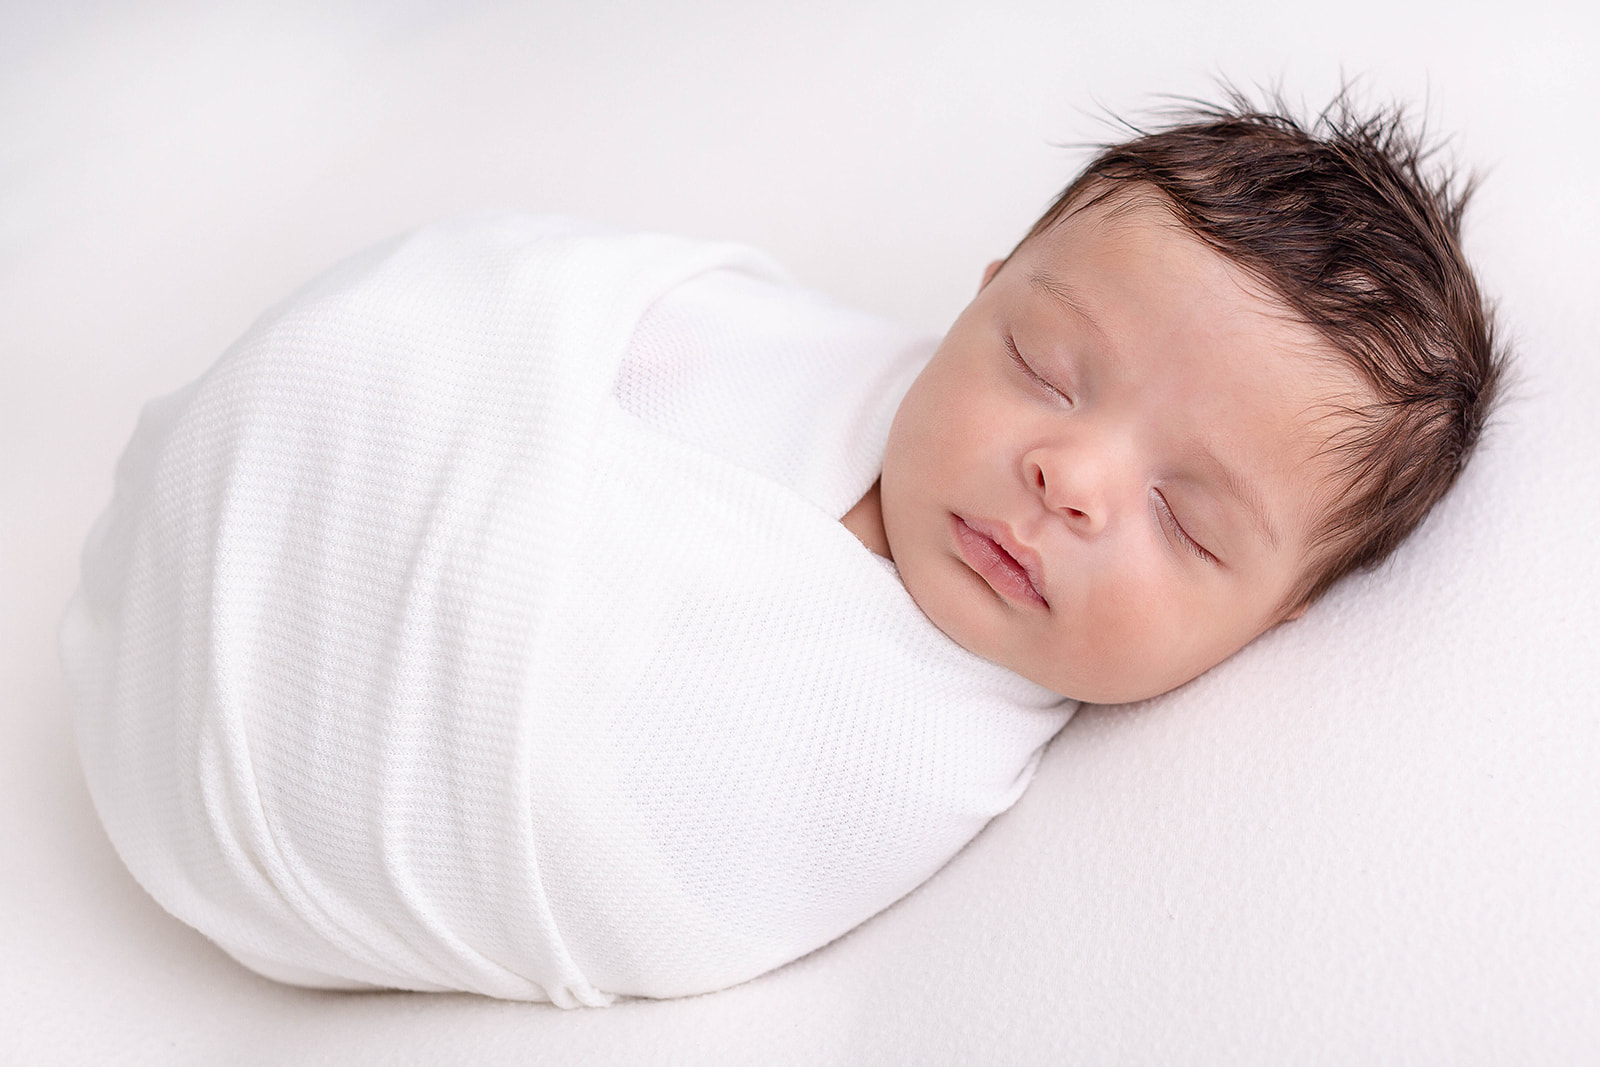 A newborn baby sleeps in a tight white swaddle Portland birth center